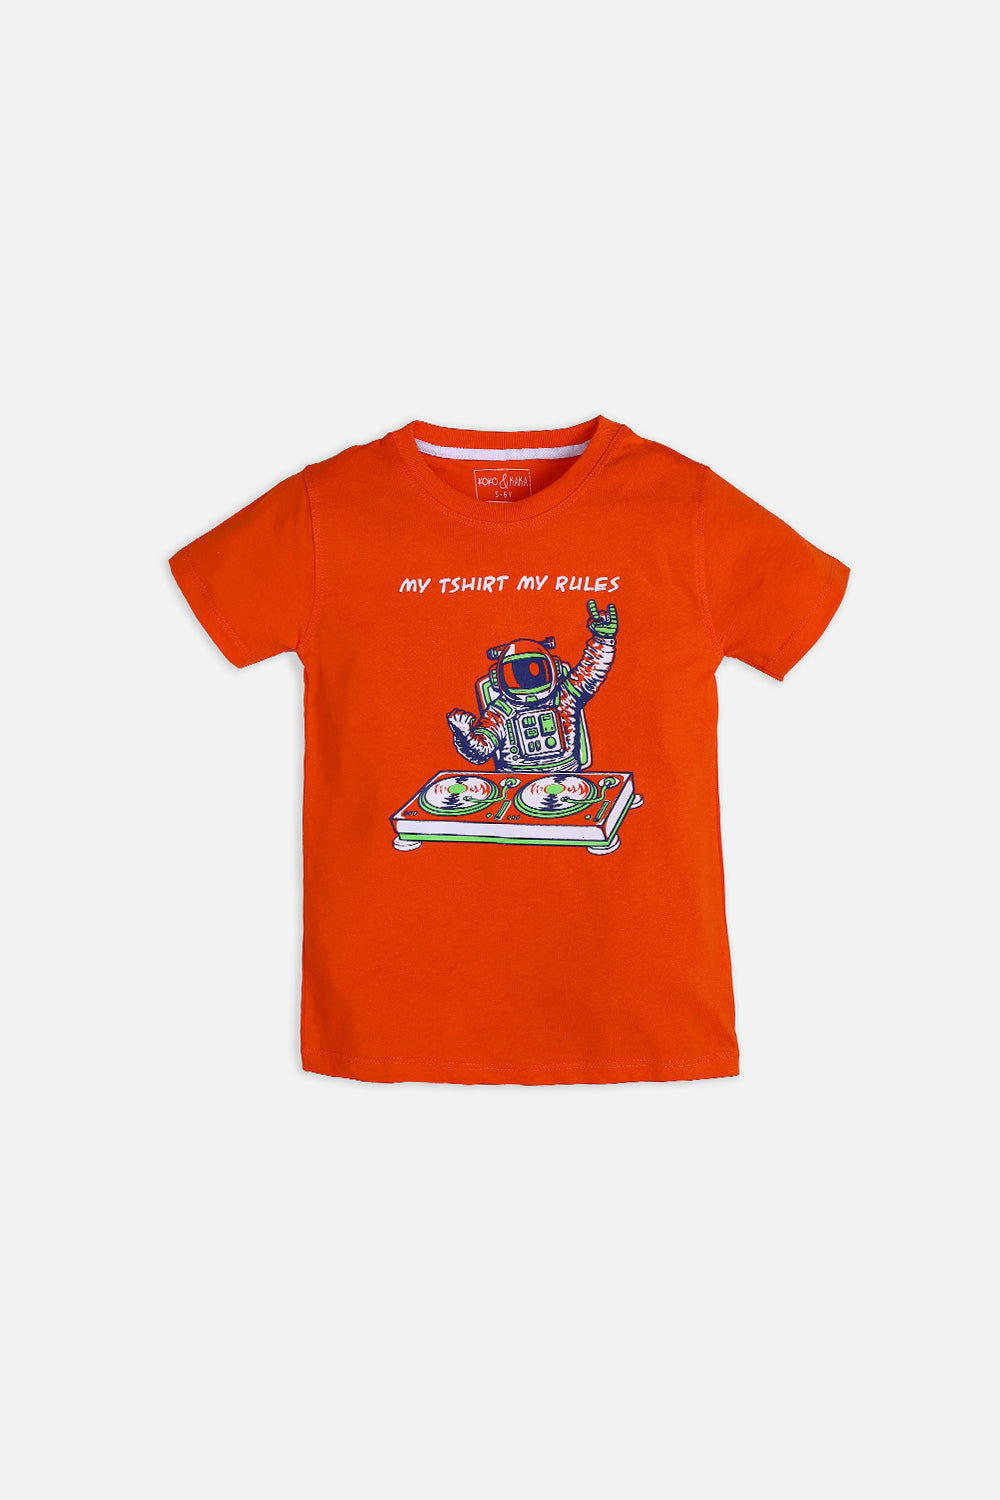 Astronaut graphic T-shirt 100% cotton jersey fabric